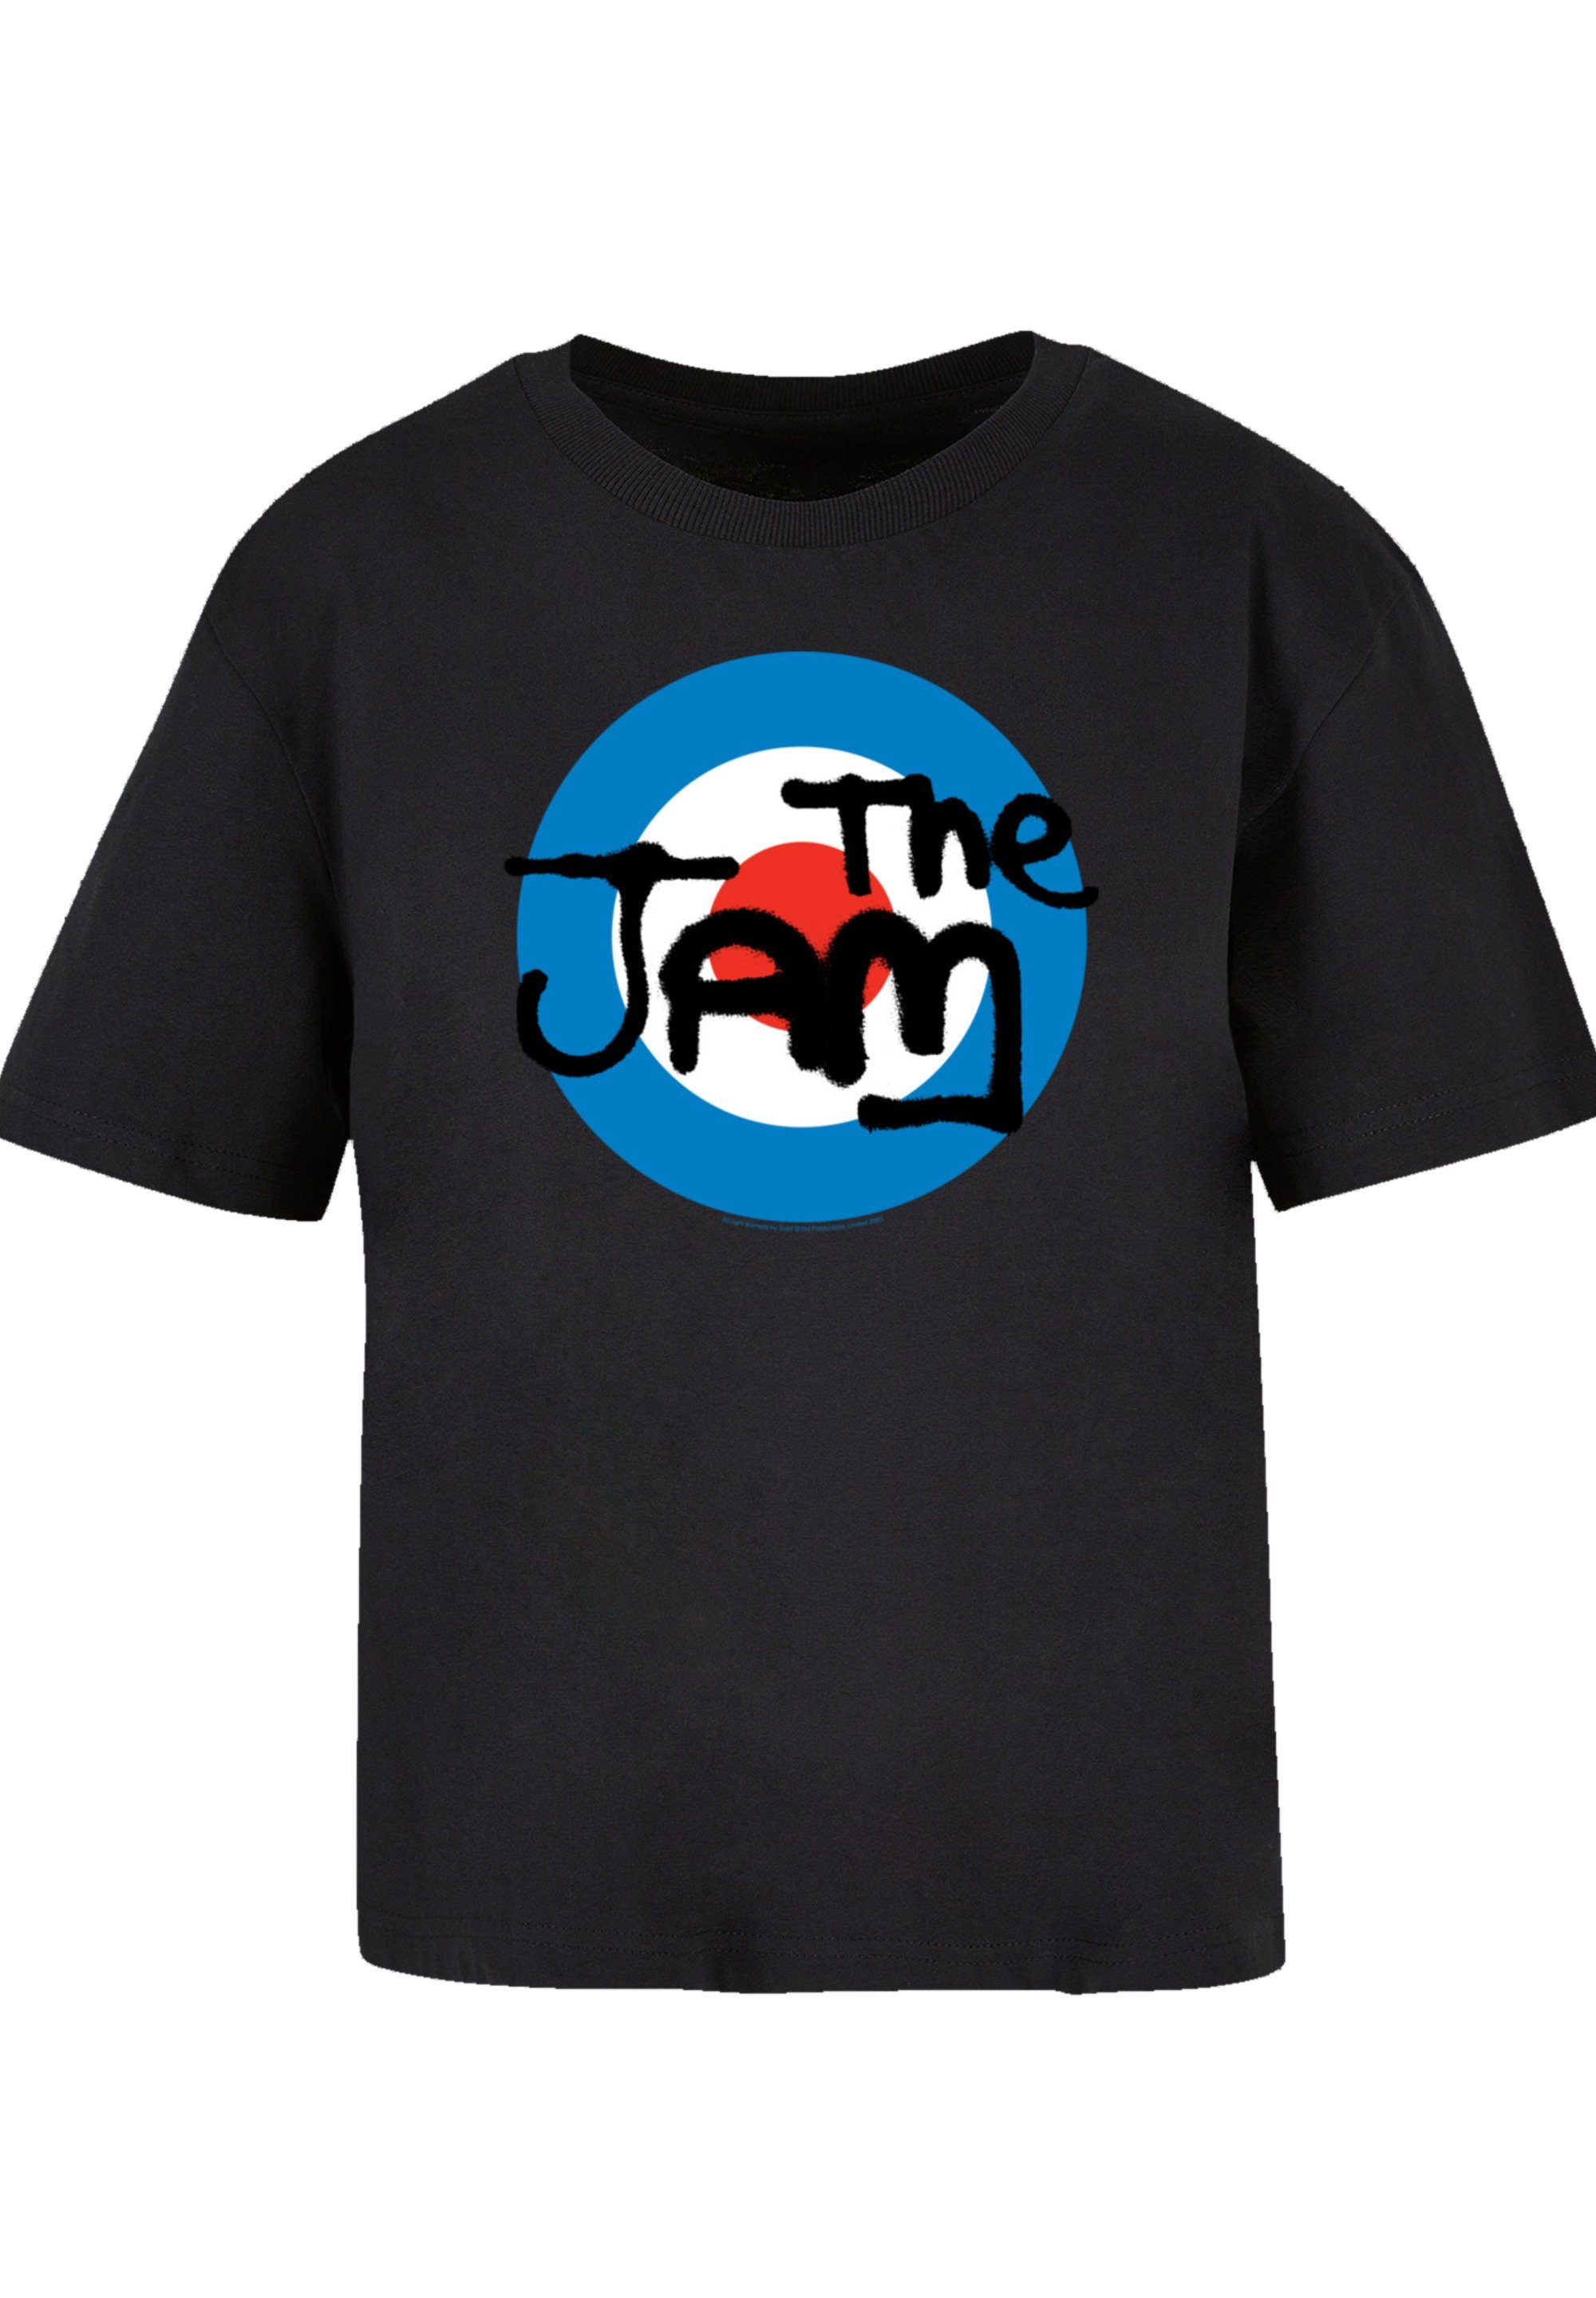 Band und Qualität, kombinierbar Komfortabel F4NT4STIC Logo T-Shirt Classic Premium Jam The vielseitig